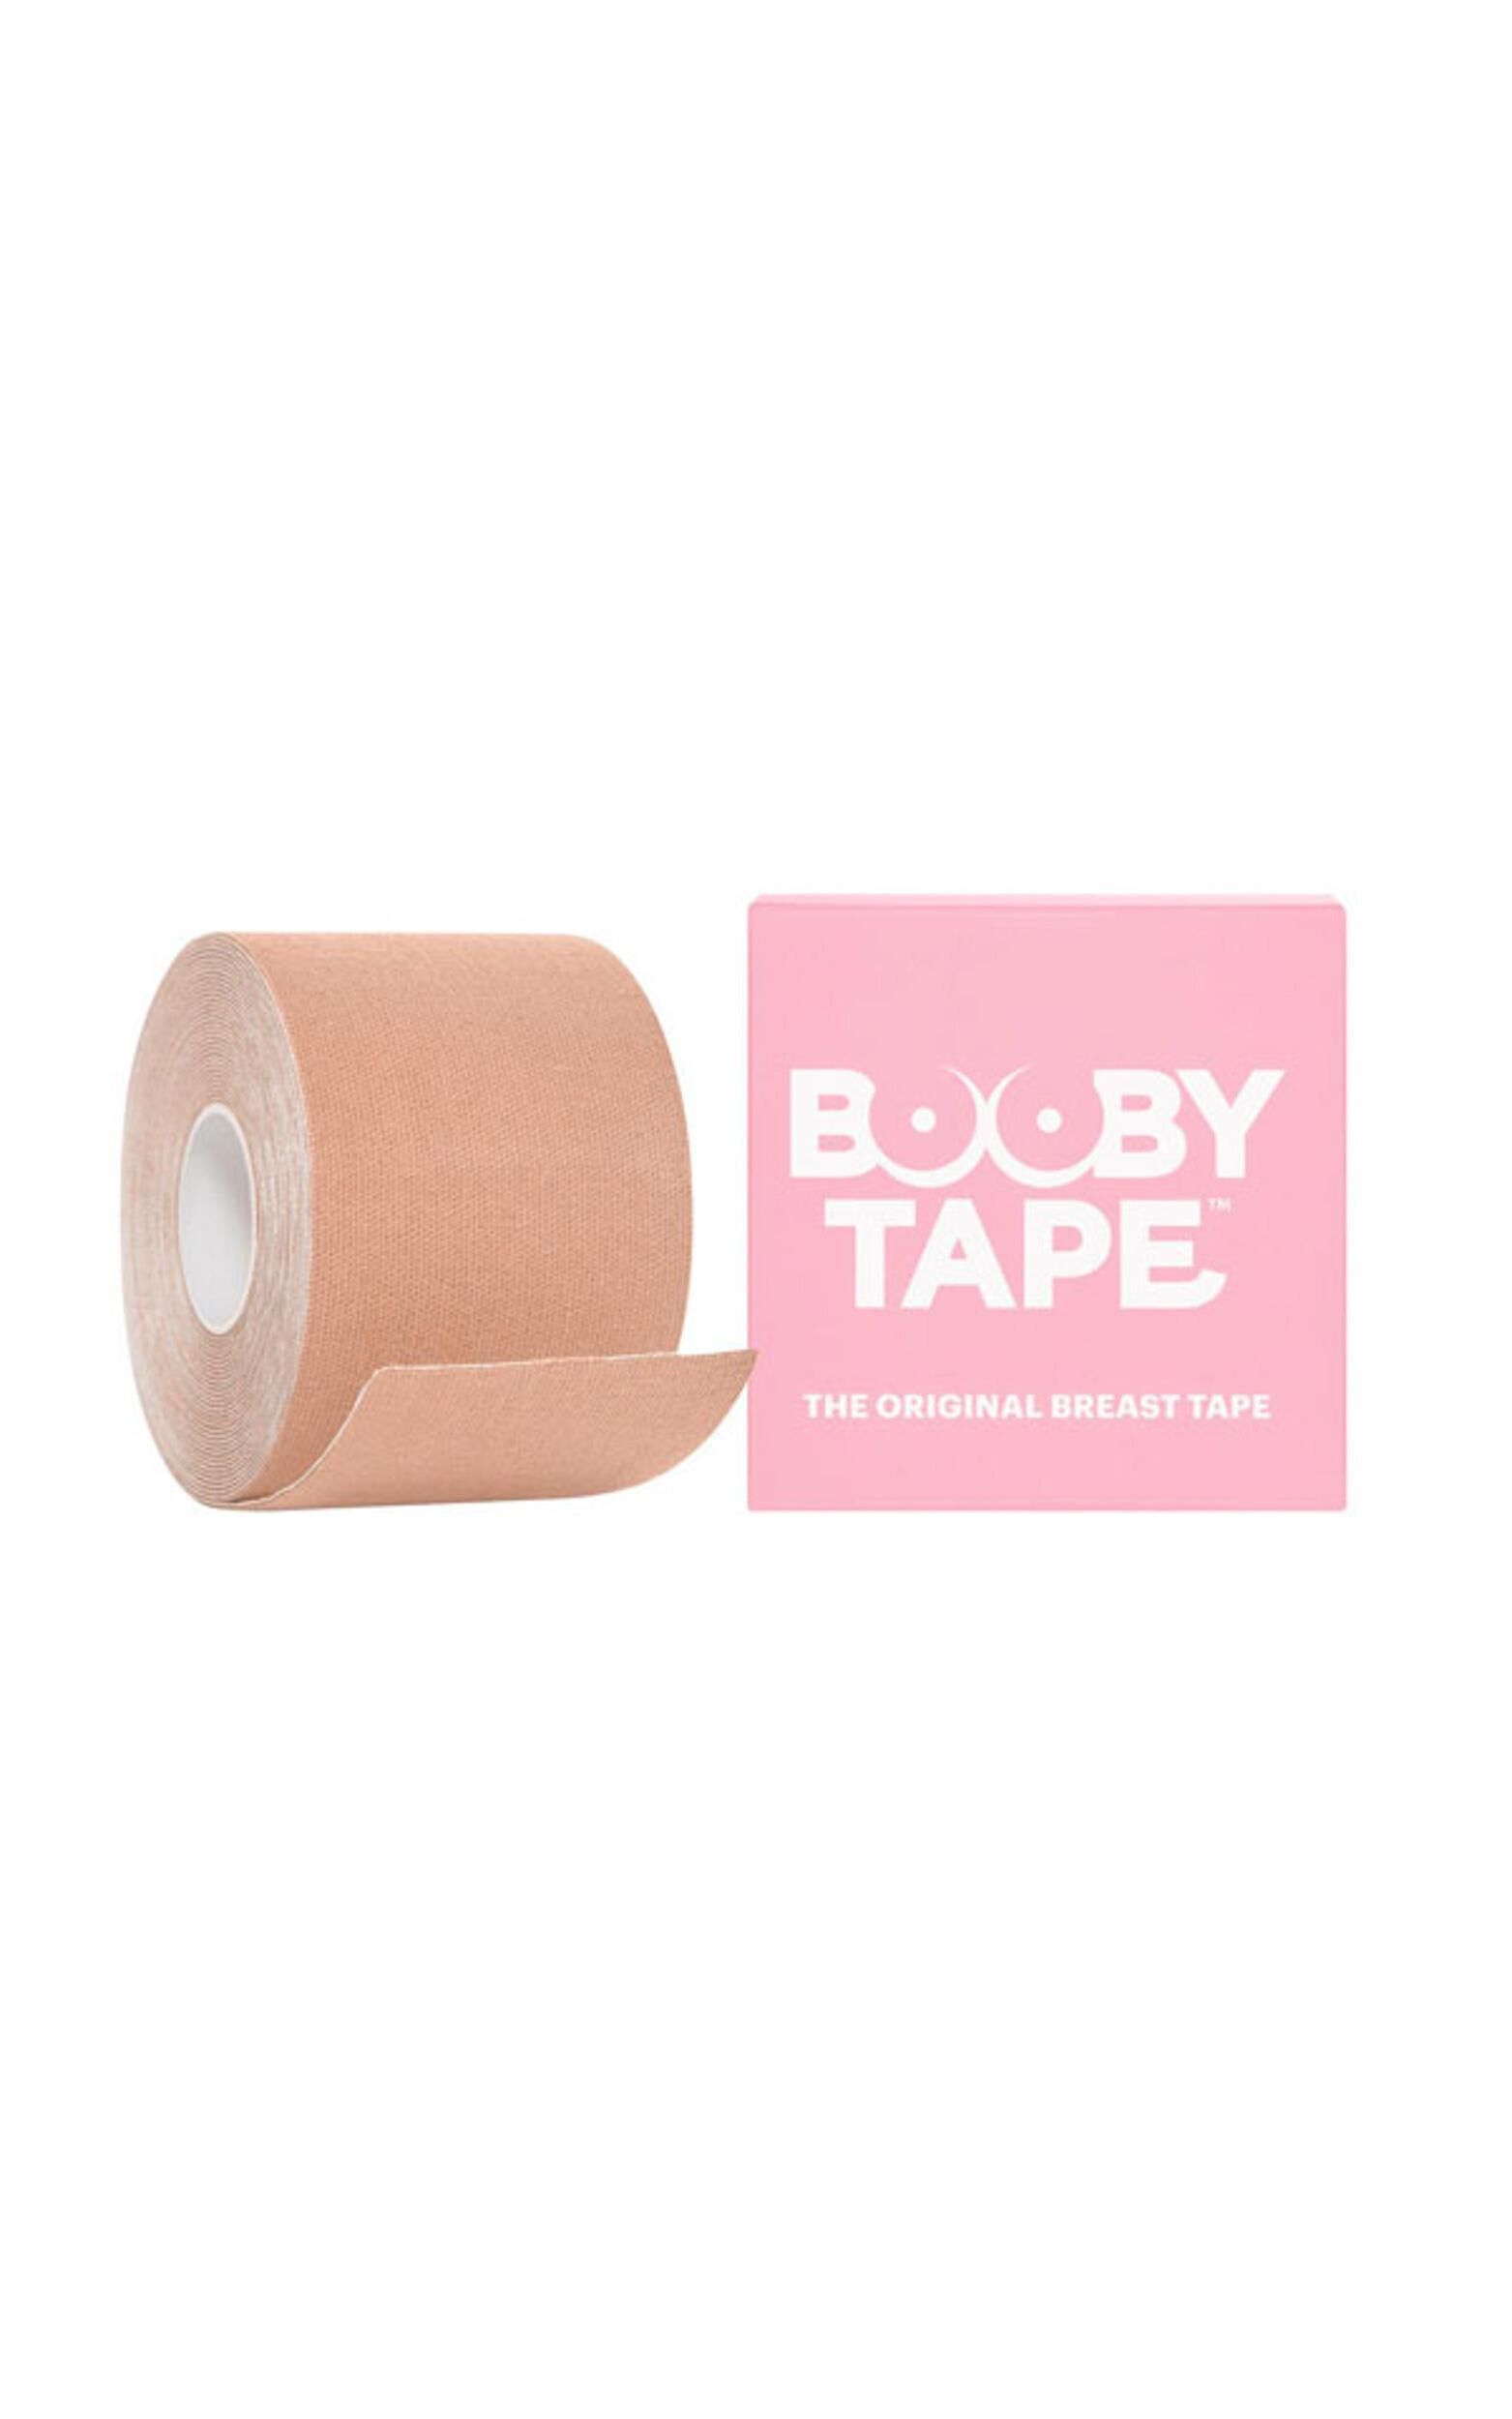 Booby Tape in Nude, BRN1